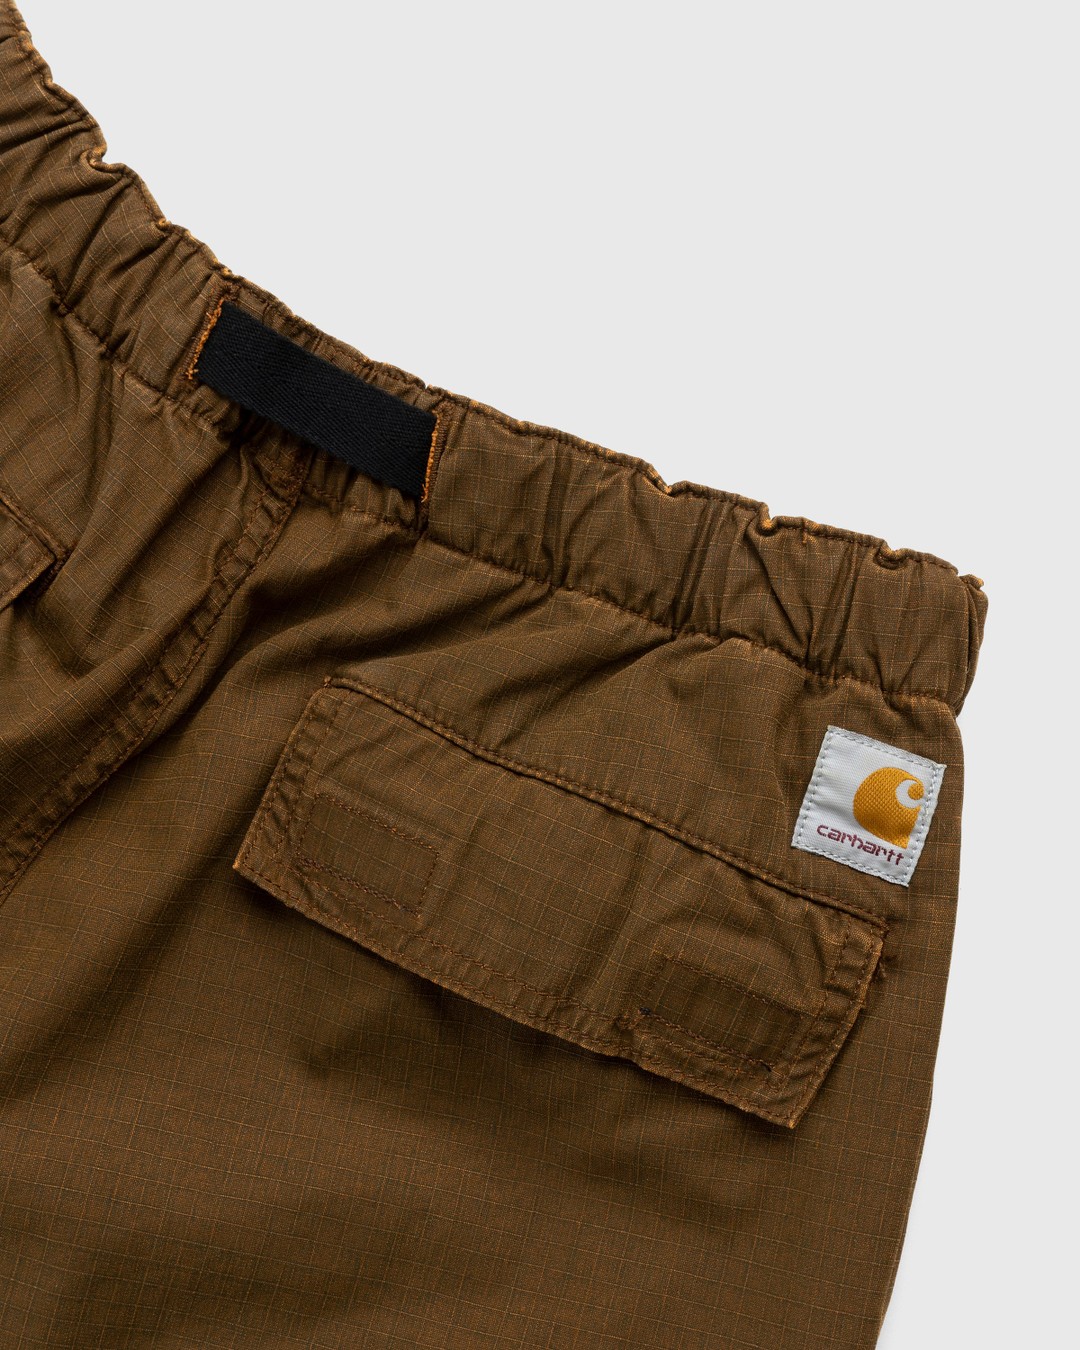 Carhartt WIP – Wynton Short Hamilton Brown - Cargo Shorts - Brown - Image 3